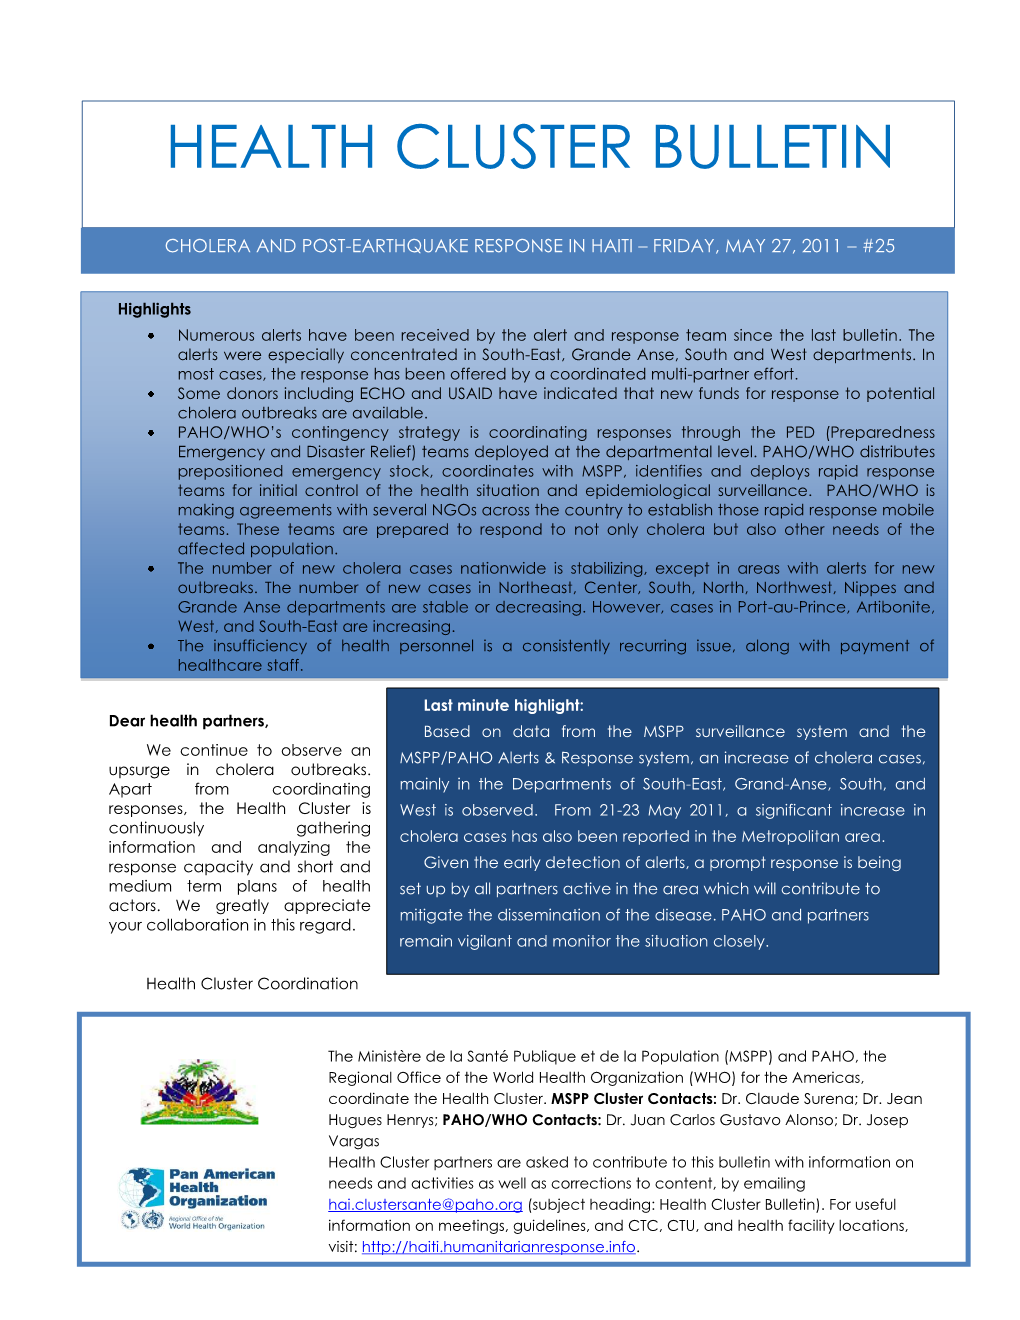 Health Cluster Bulletin